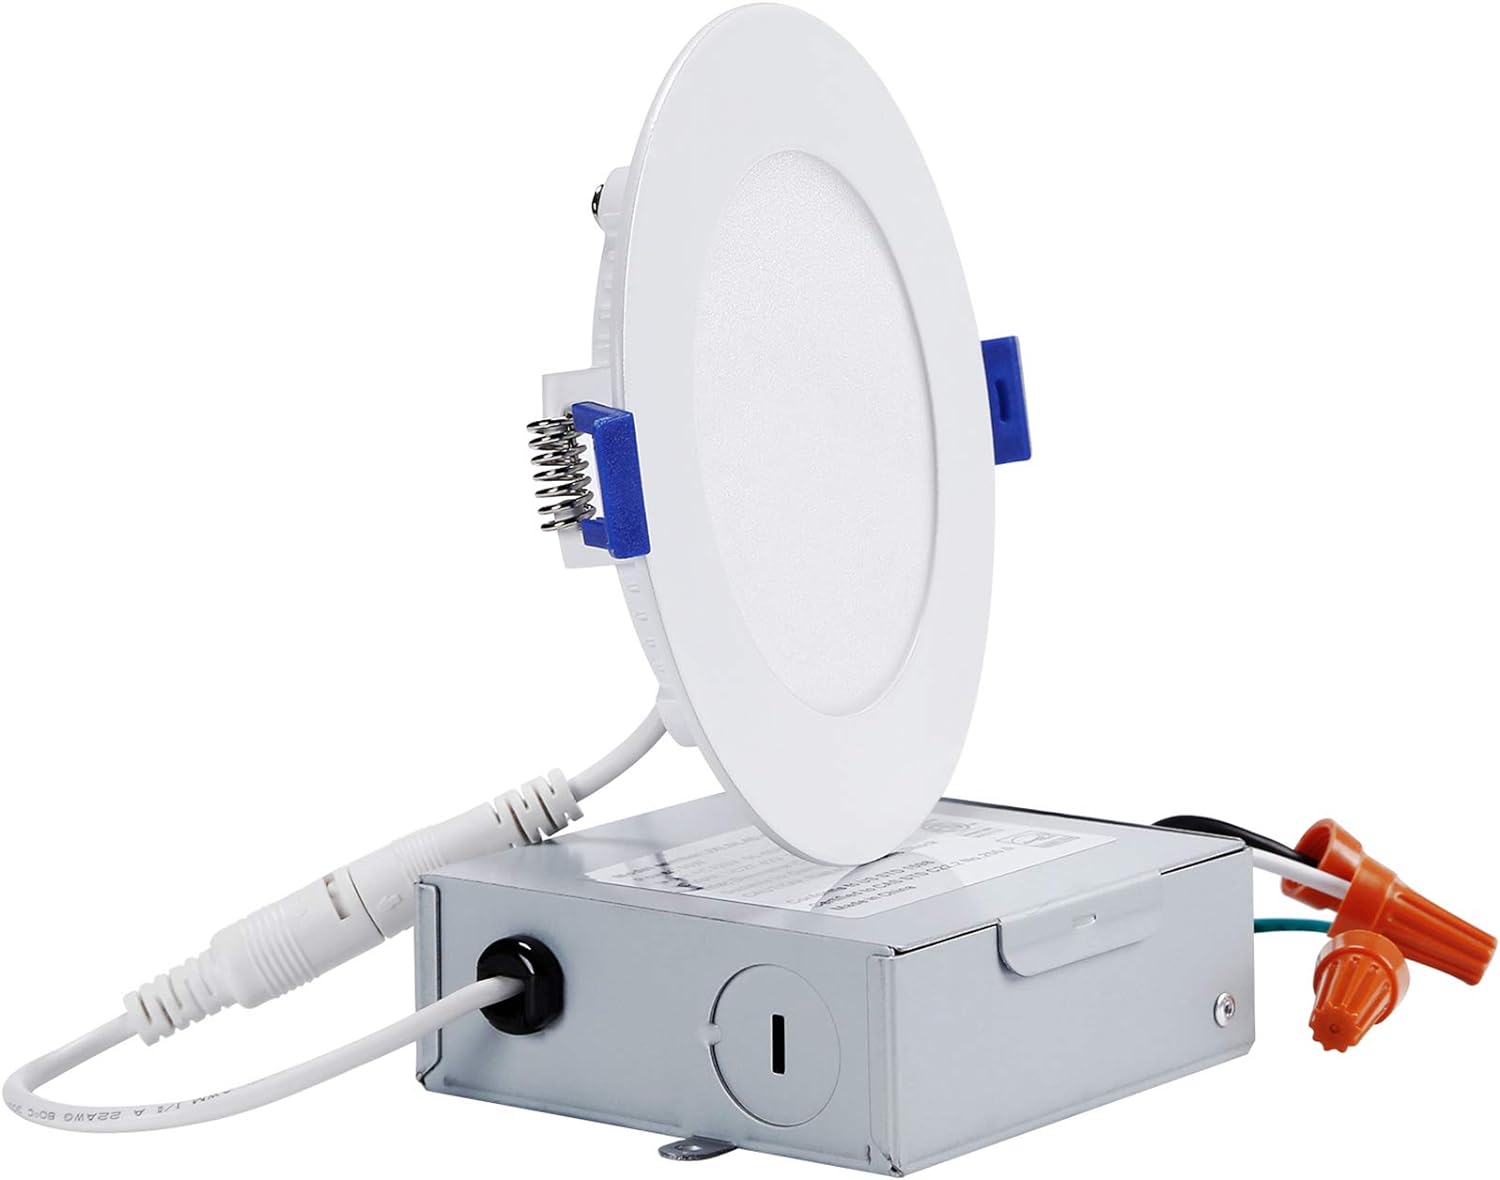 SlimPanel 4" LED Ultra-thin Recessed Light - 10W - Single CCT